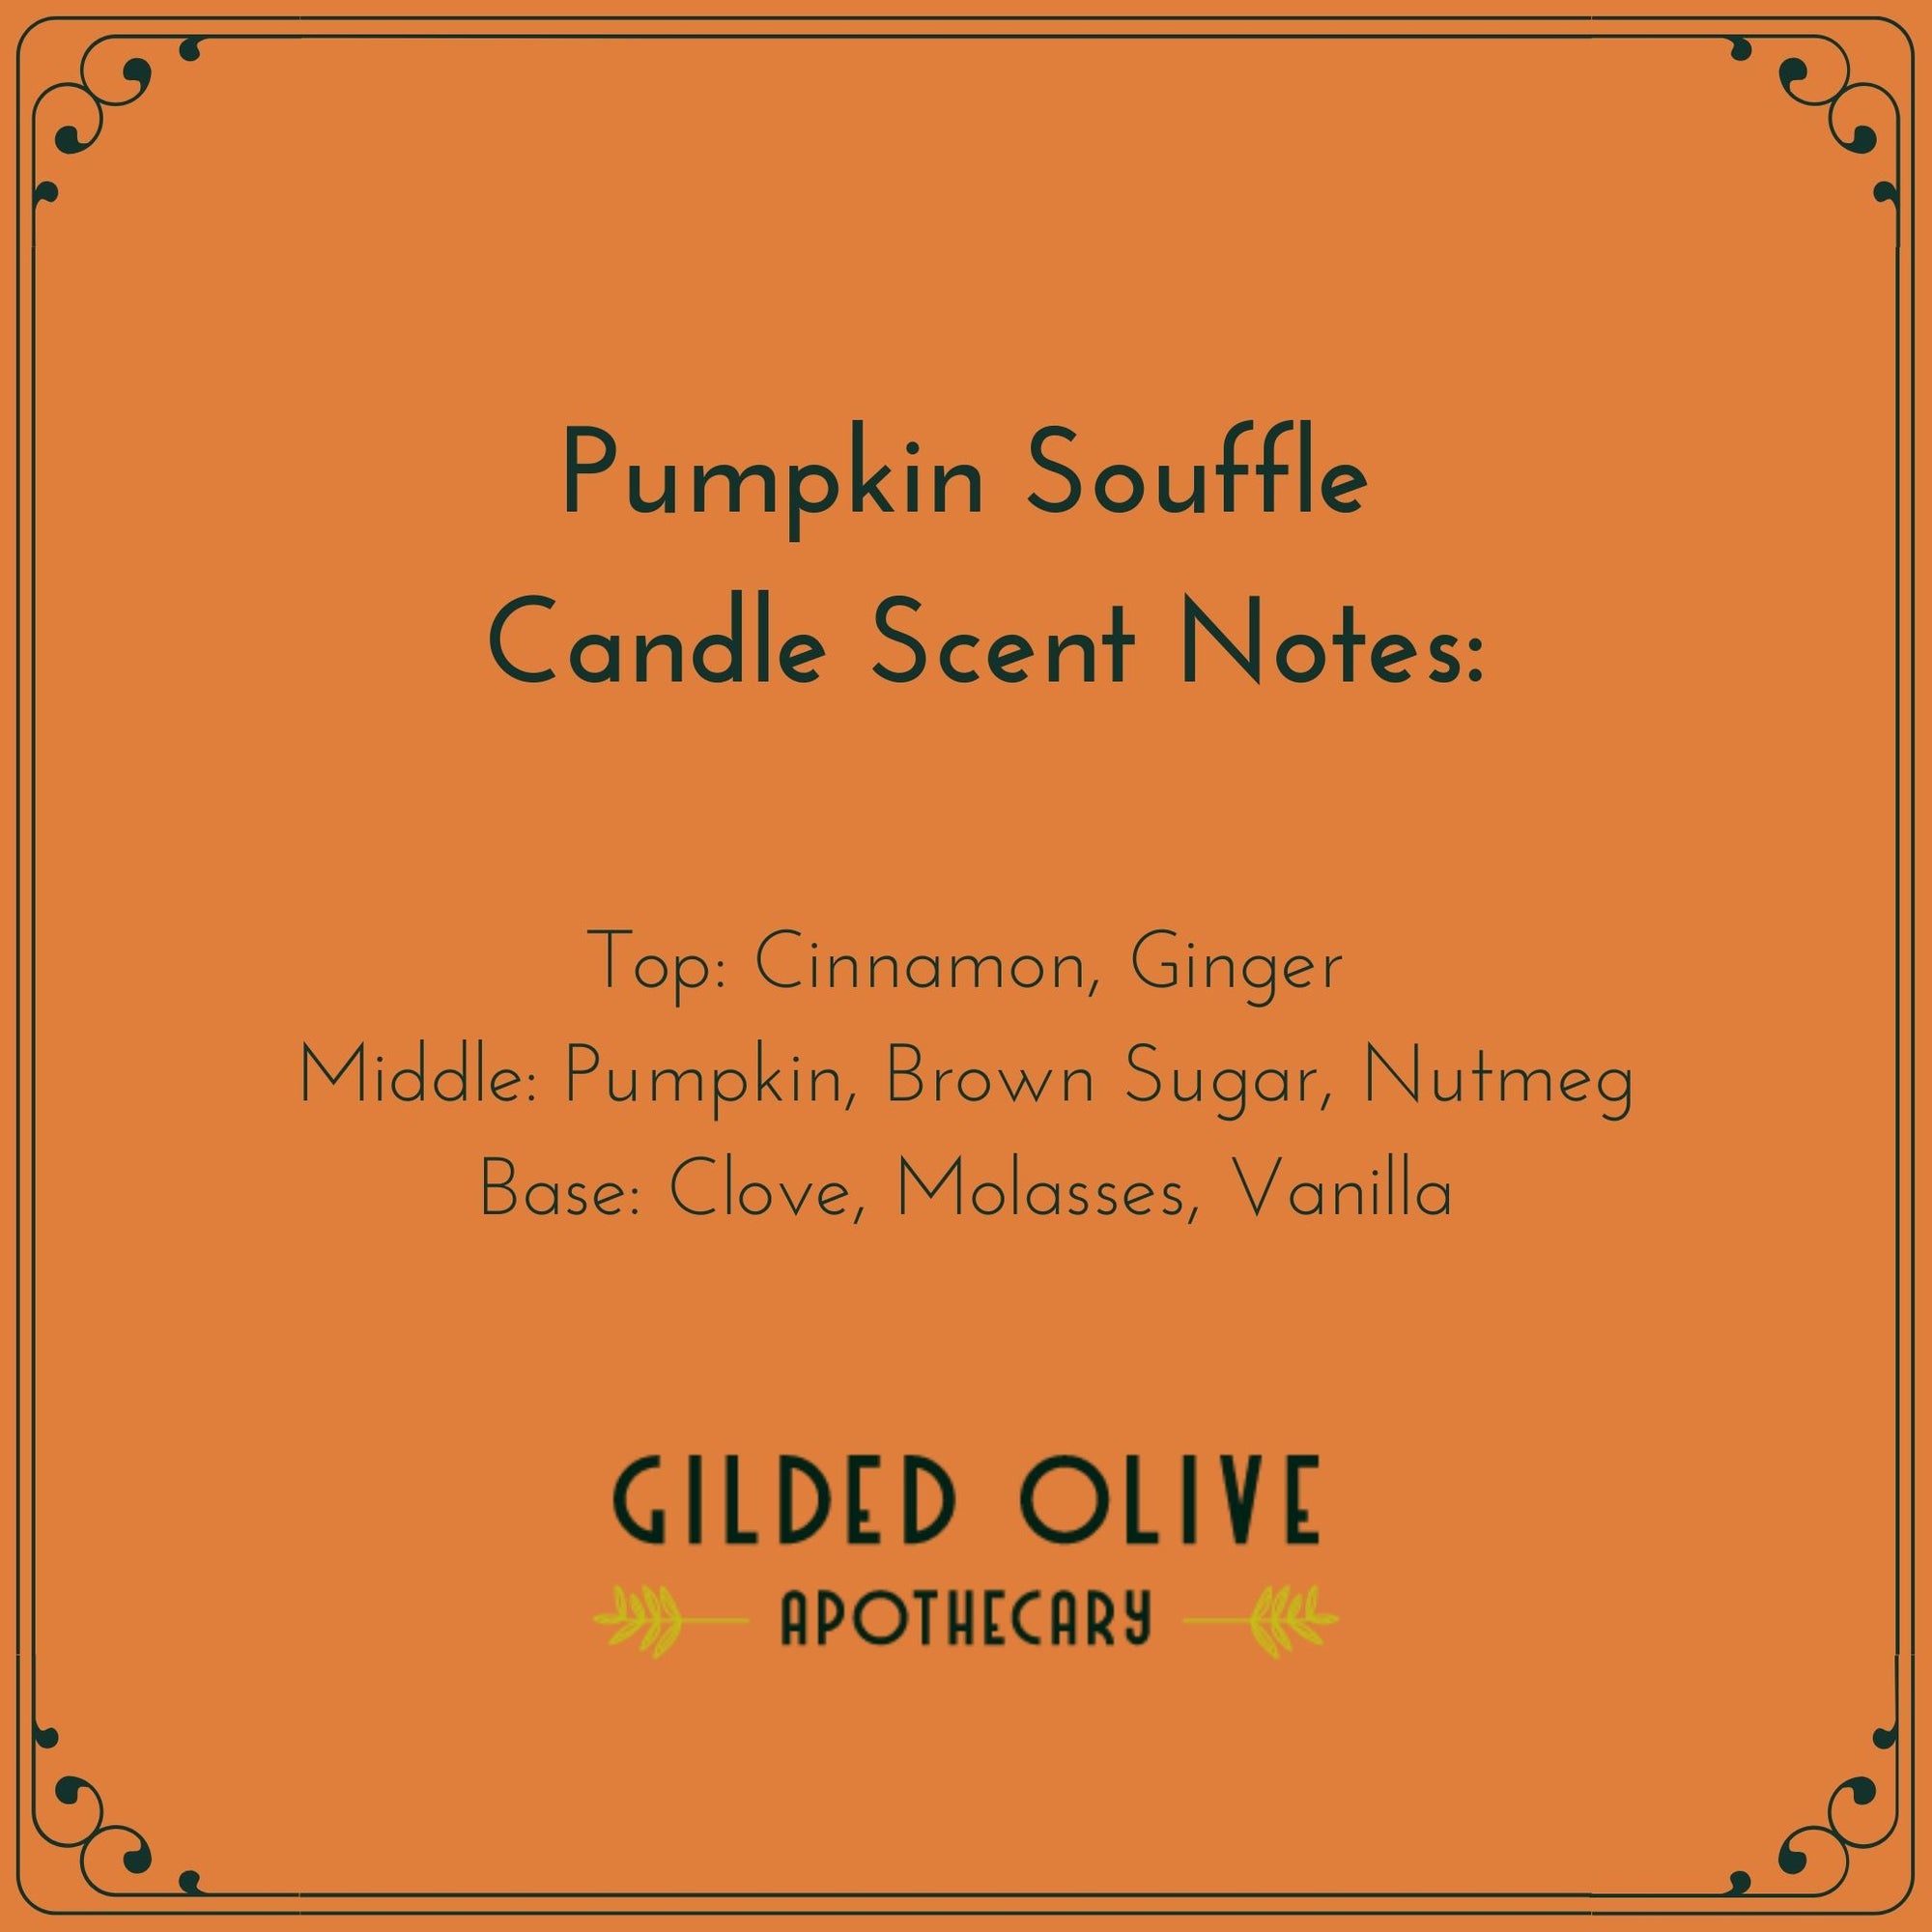 Pumpkin Souffle Scent Notes